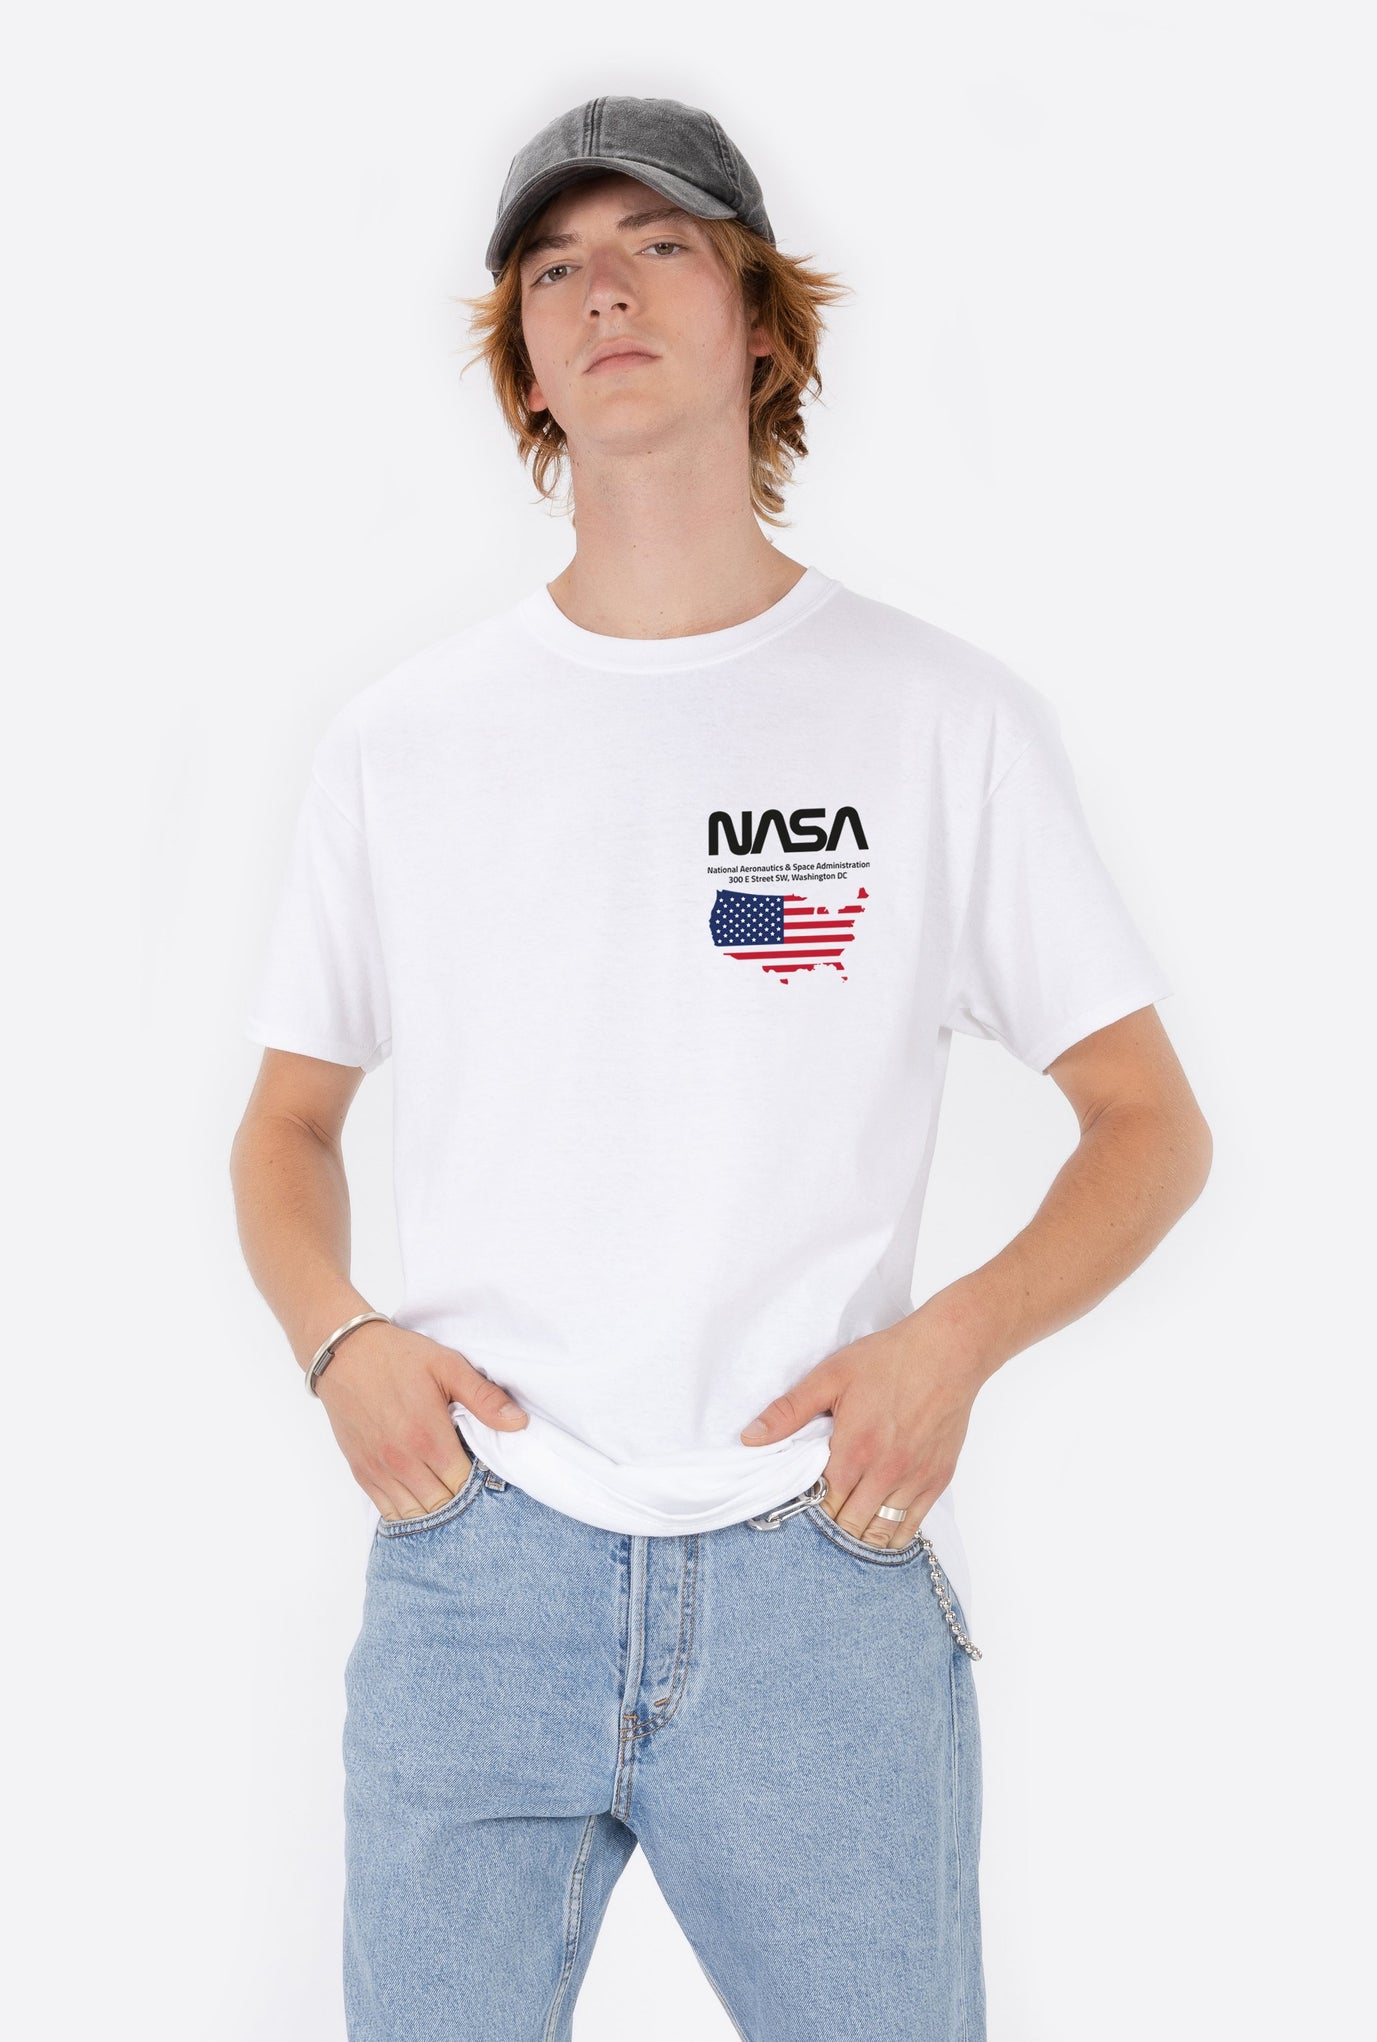 T-Shirt S/S NASA Map Heart